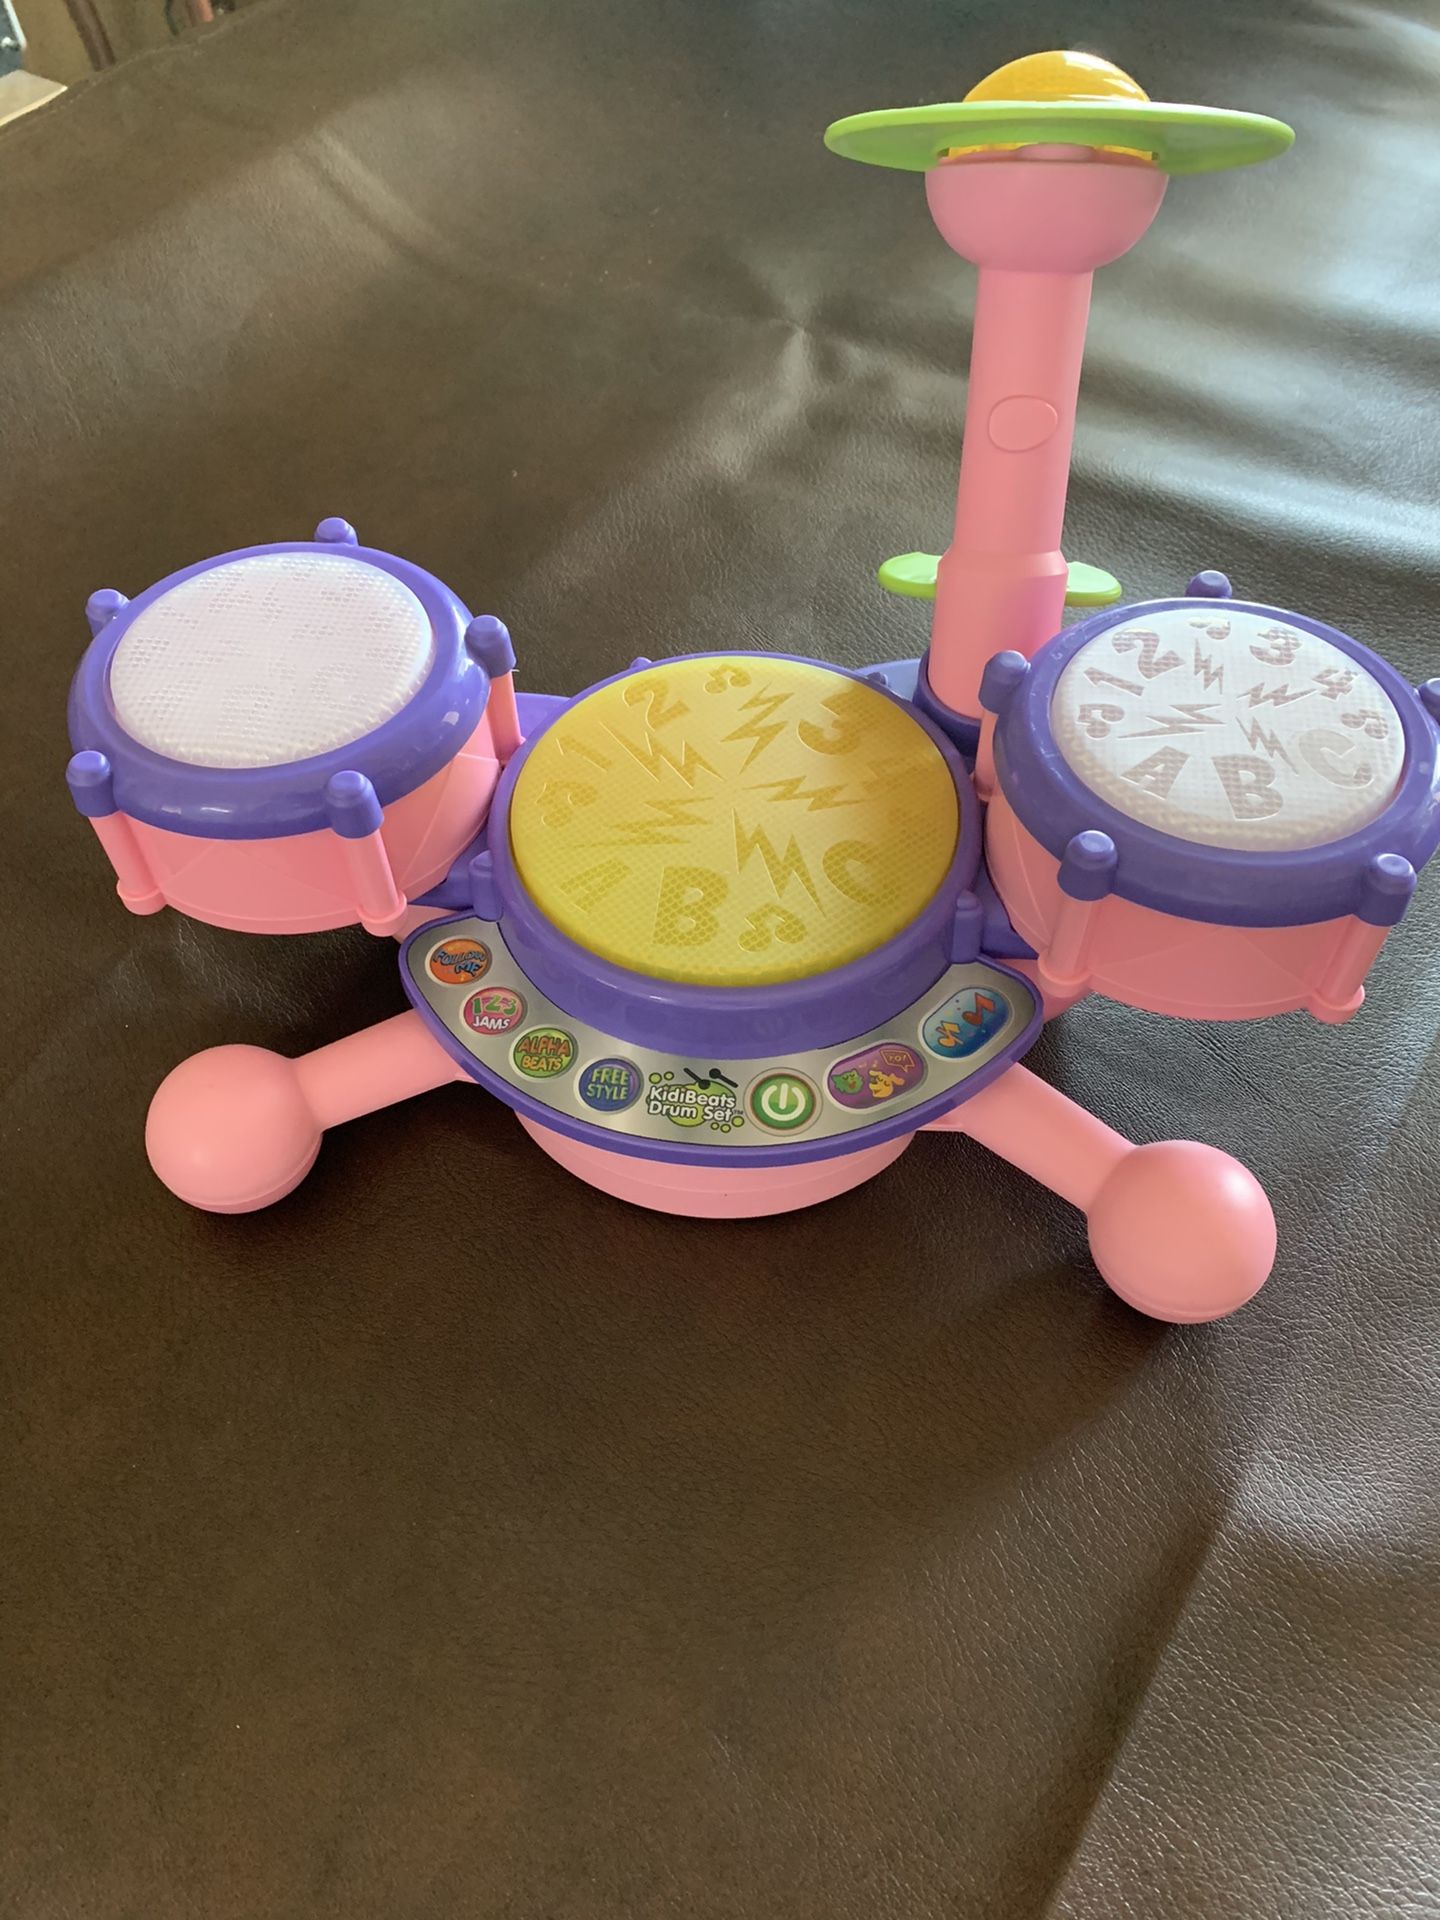 KidiBeats Drum set, a toddler / baby toy :-)